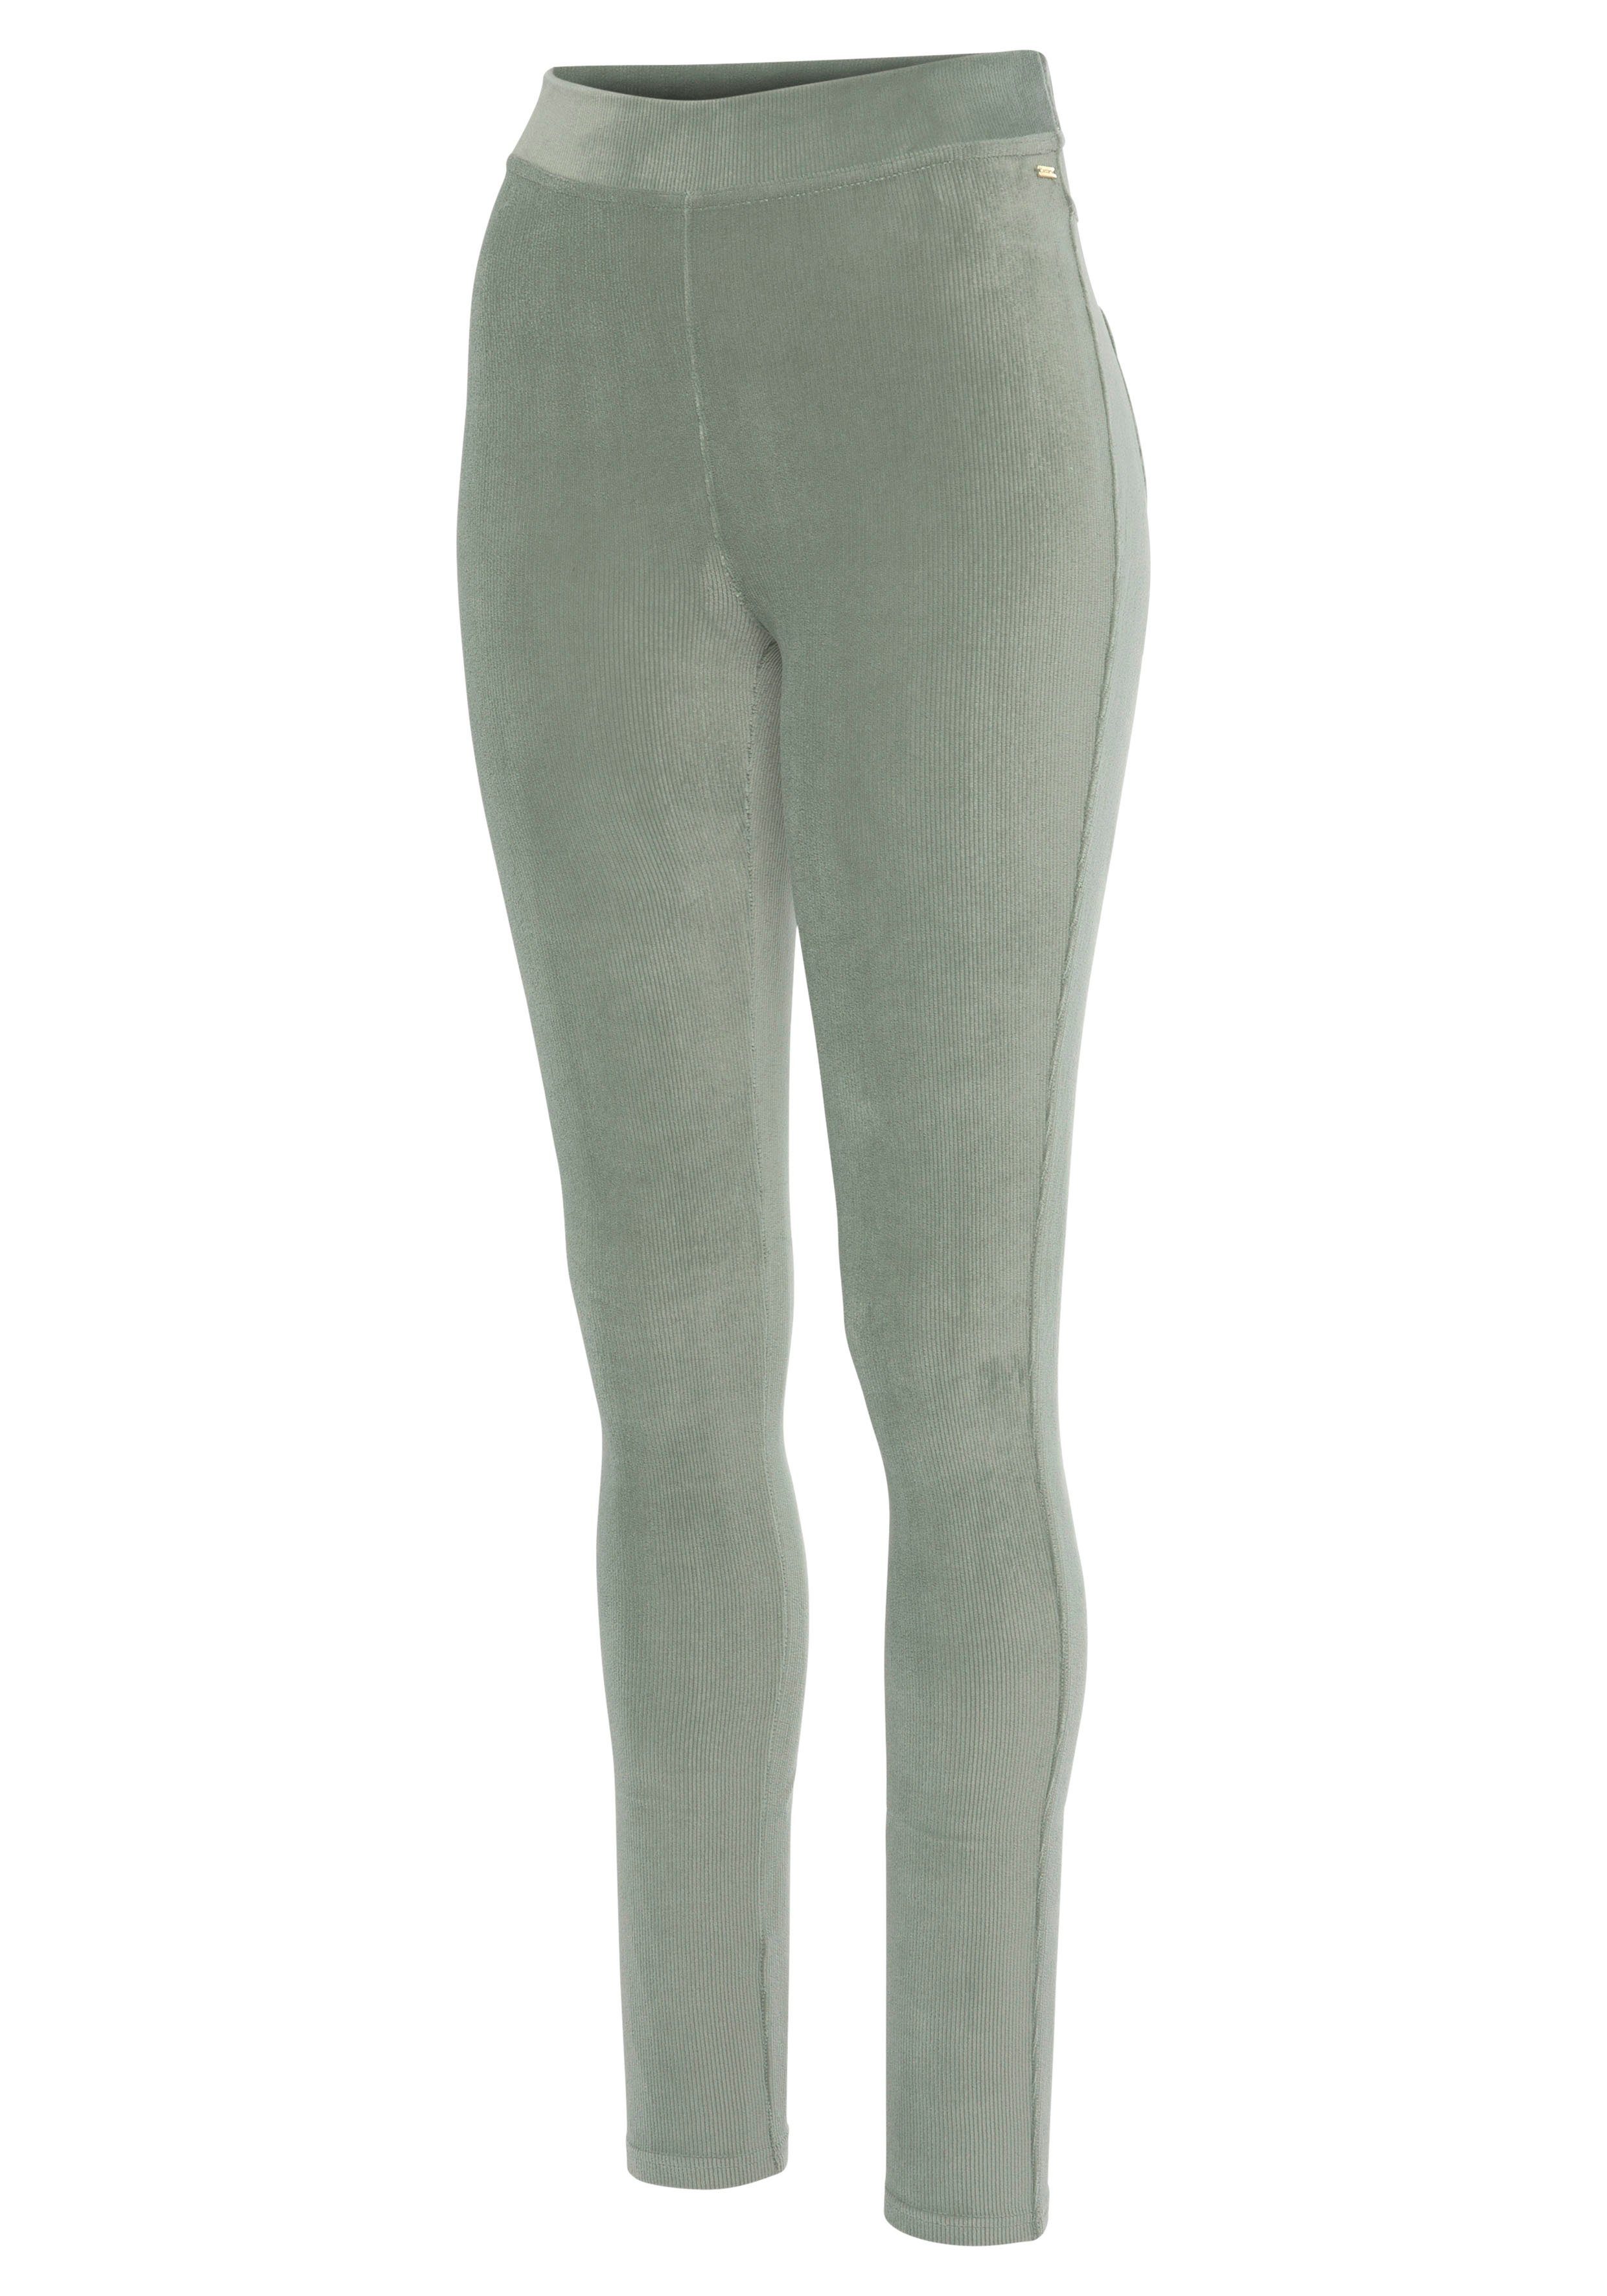 in Loungewear Material grün LASCANA aus mint Cord-Optik, Leggings weichem